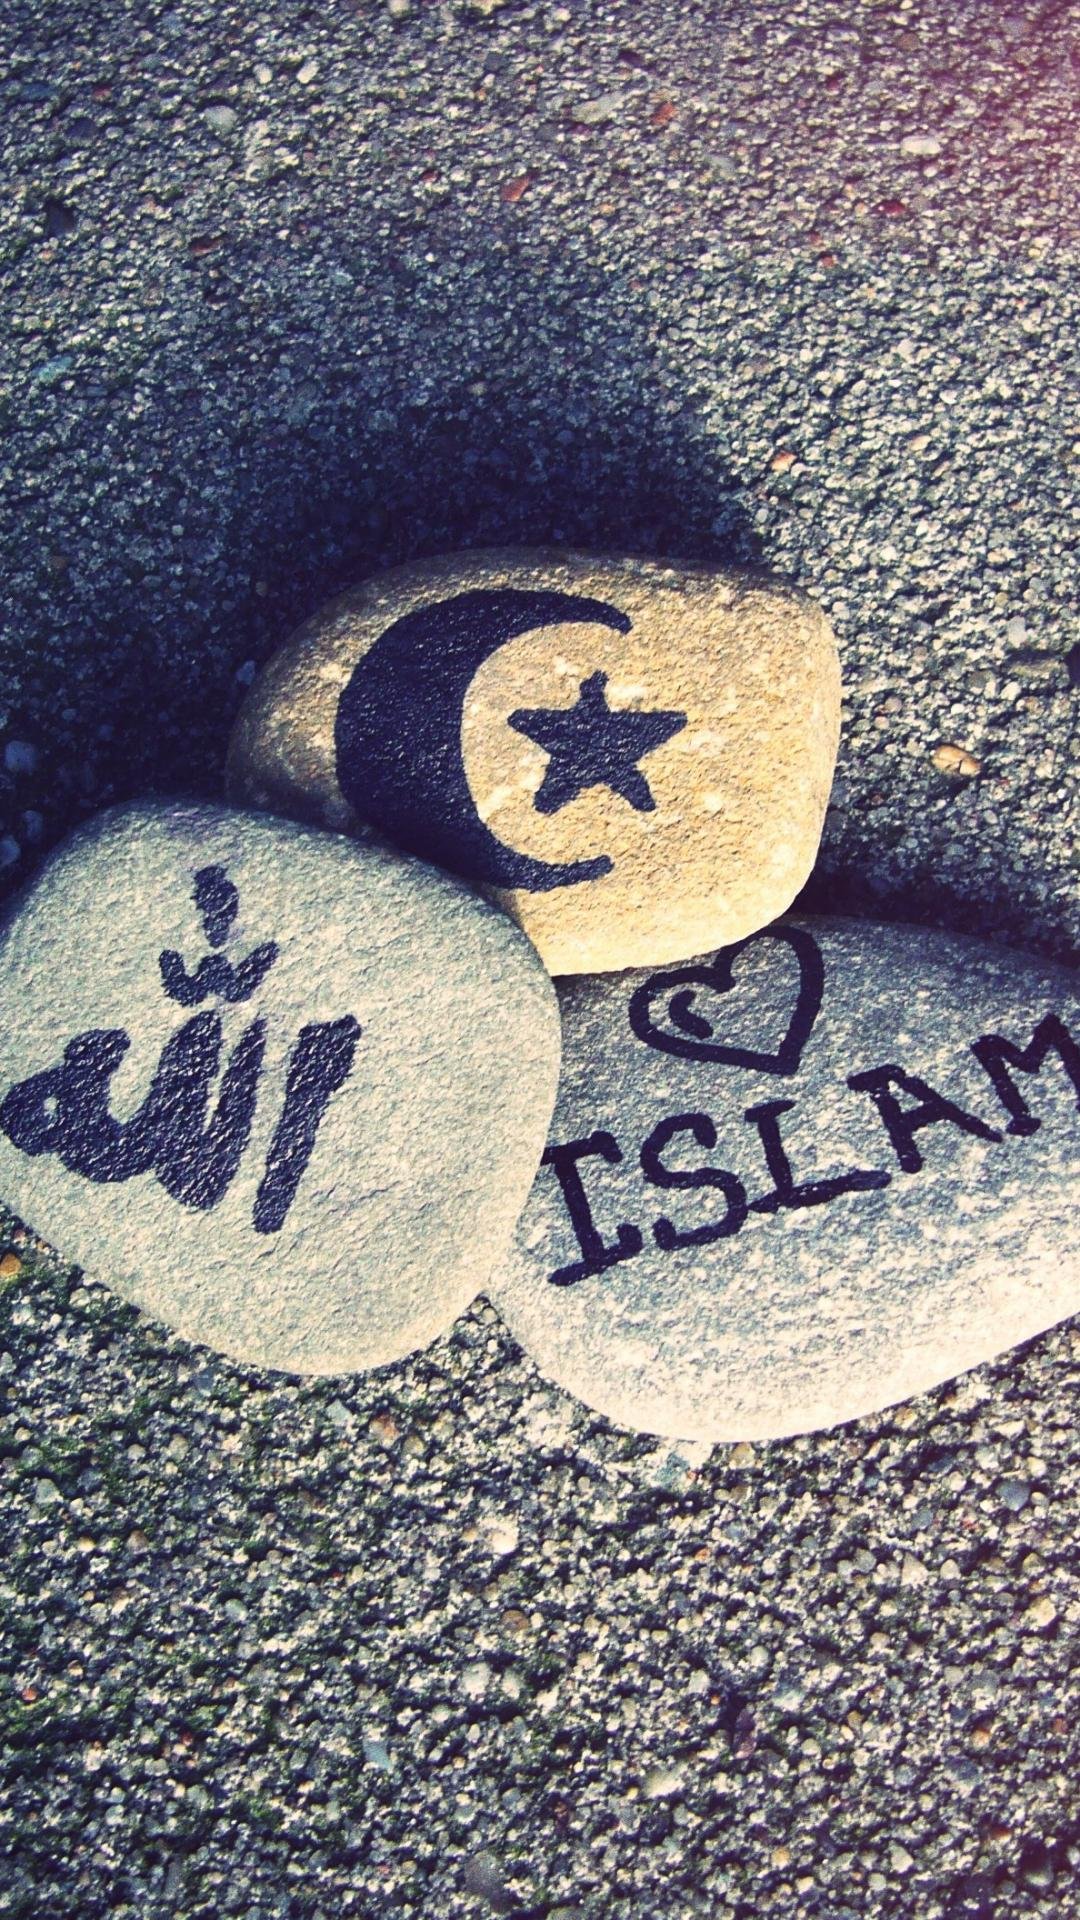 Islam - god